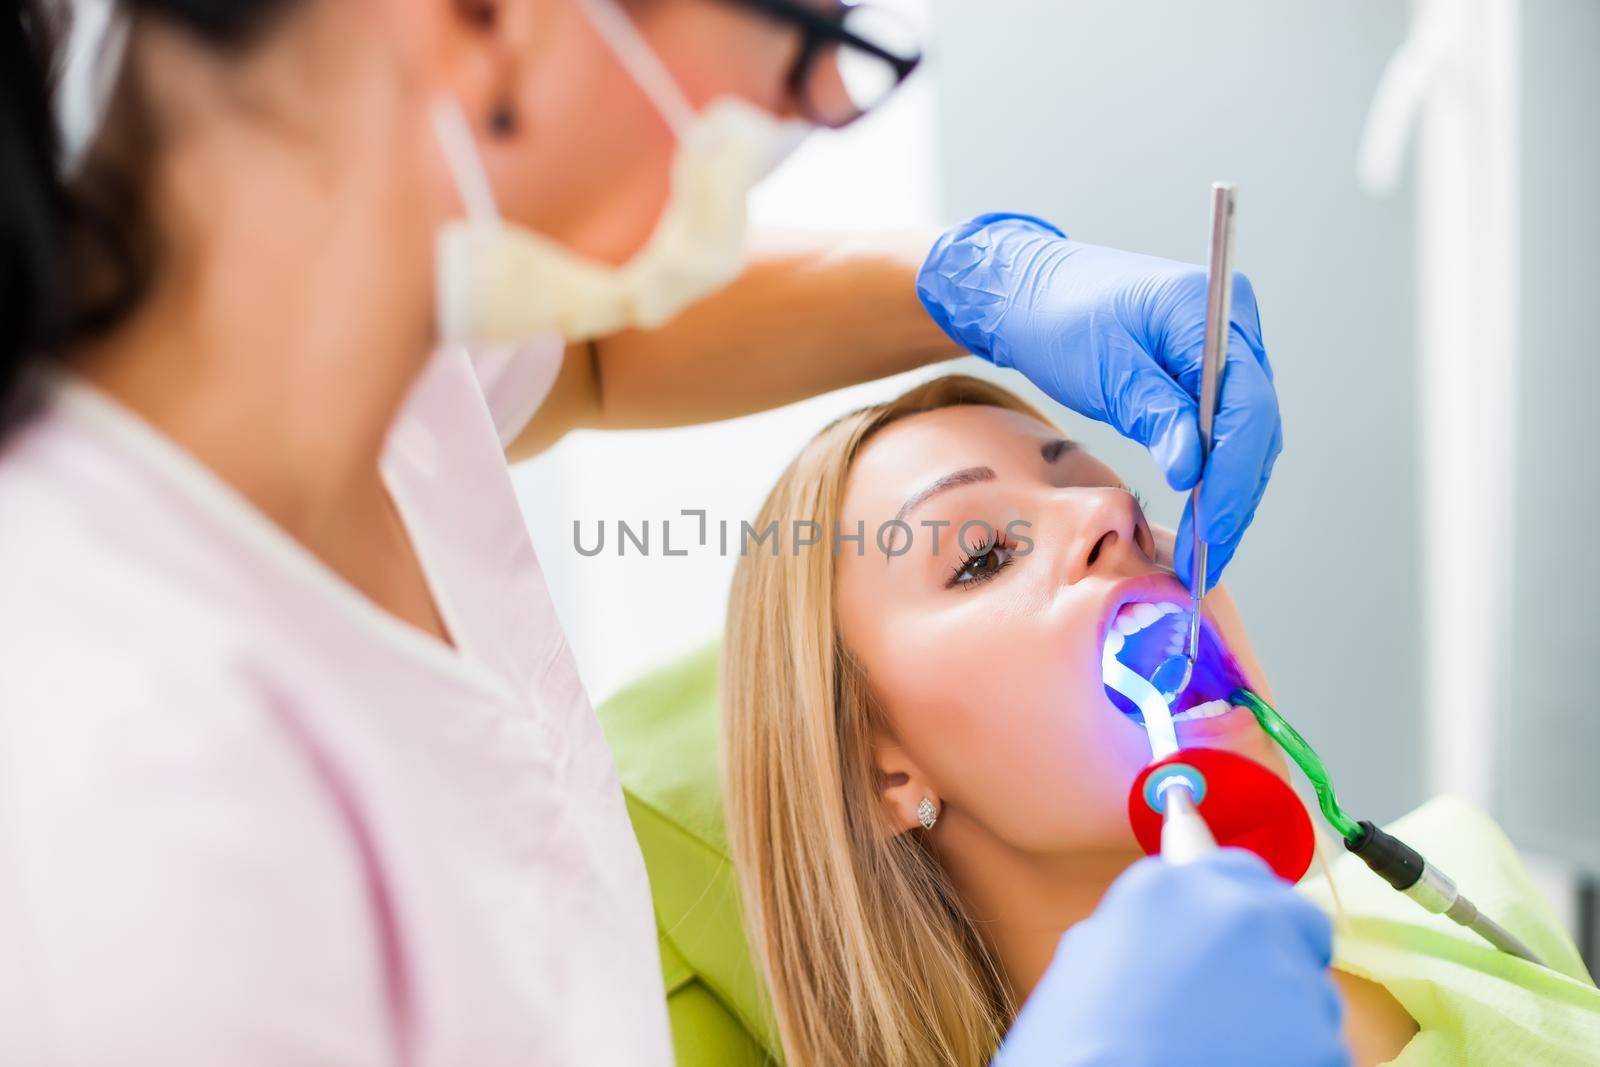 Dentist at work by djoronimo